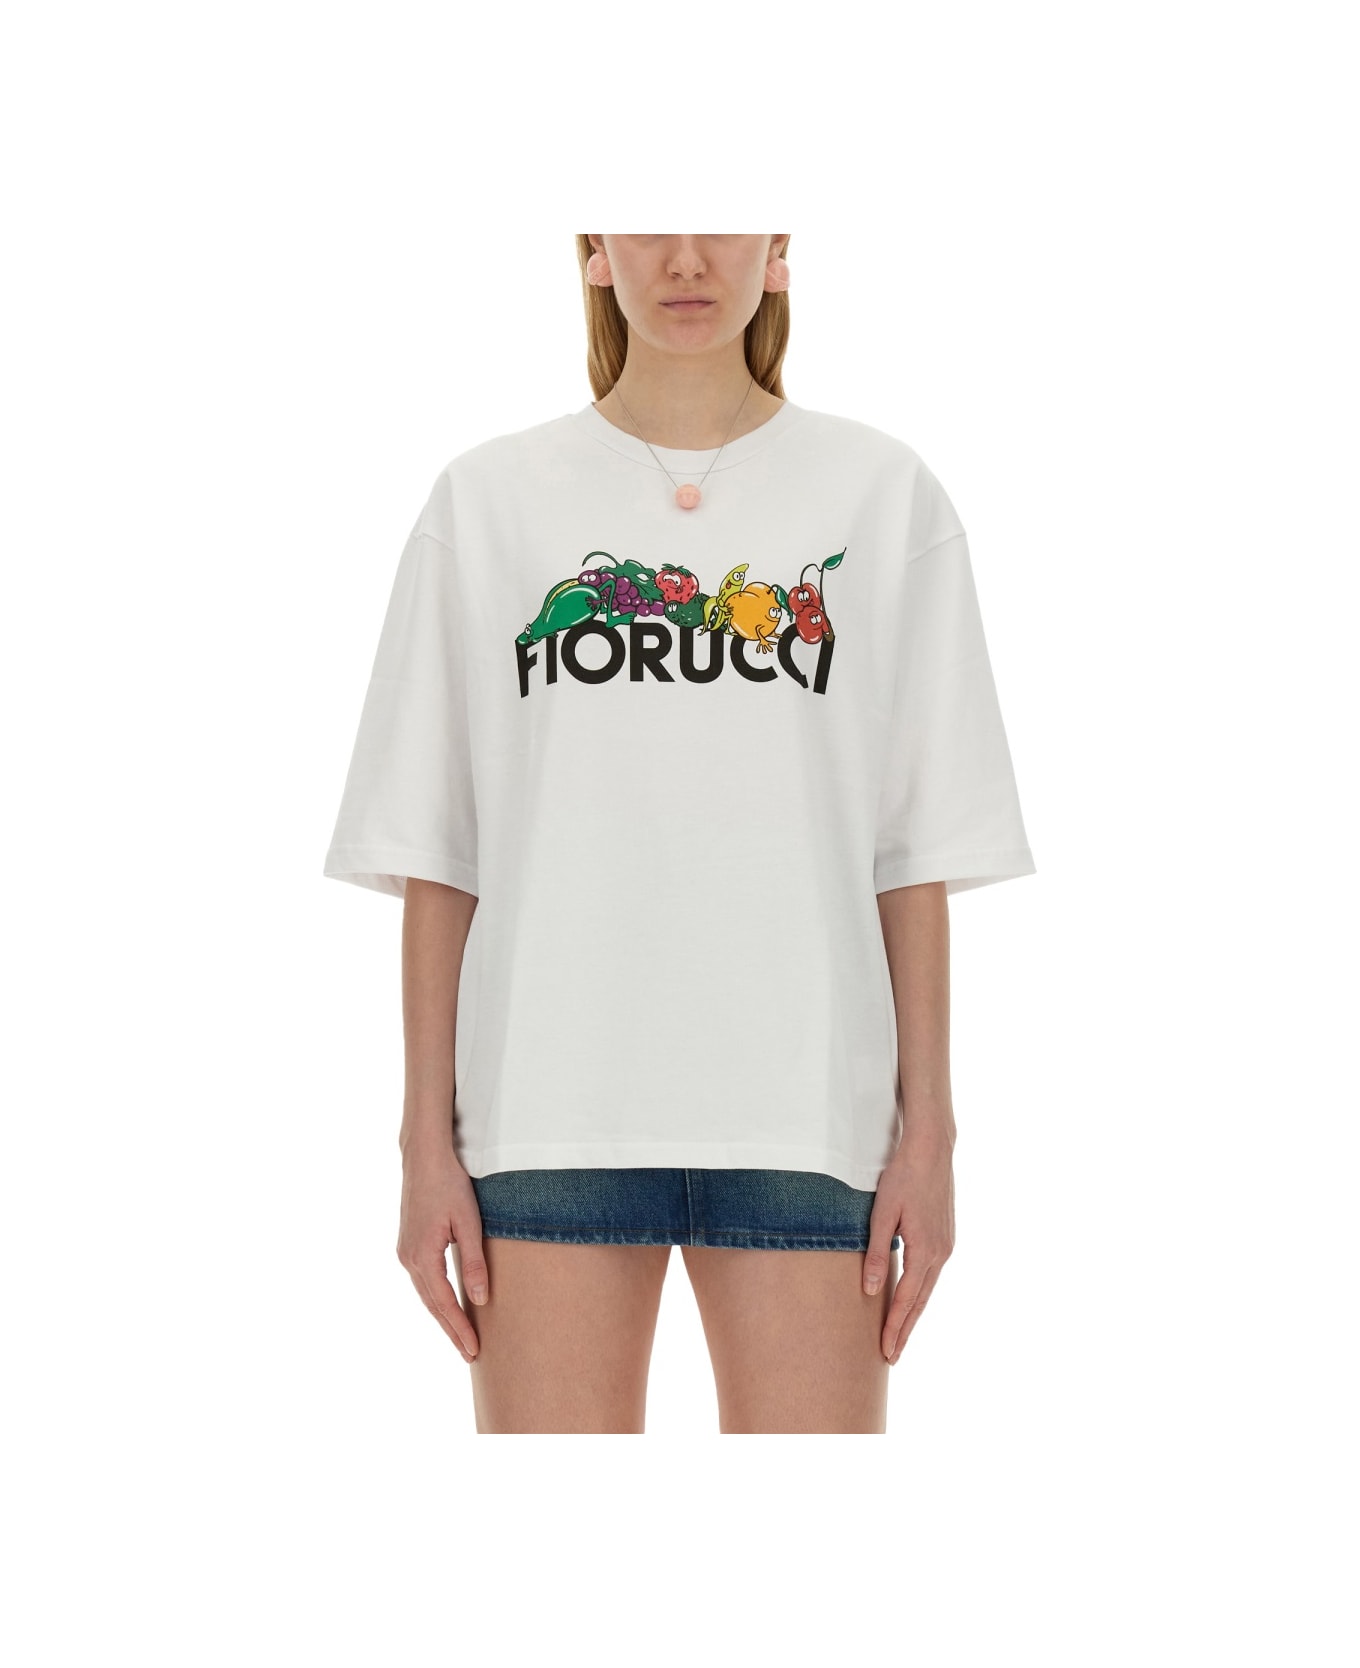 Fiorucci Fruit Print T-shirt - WHITE